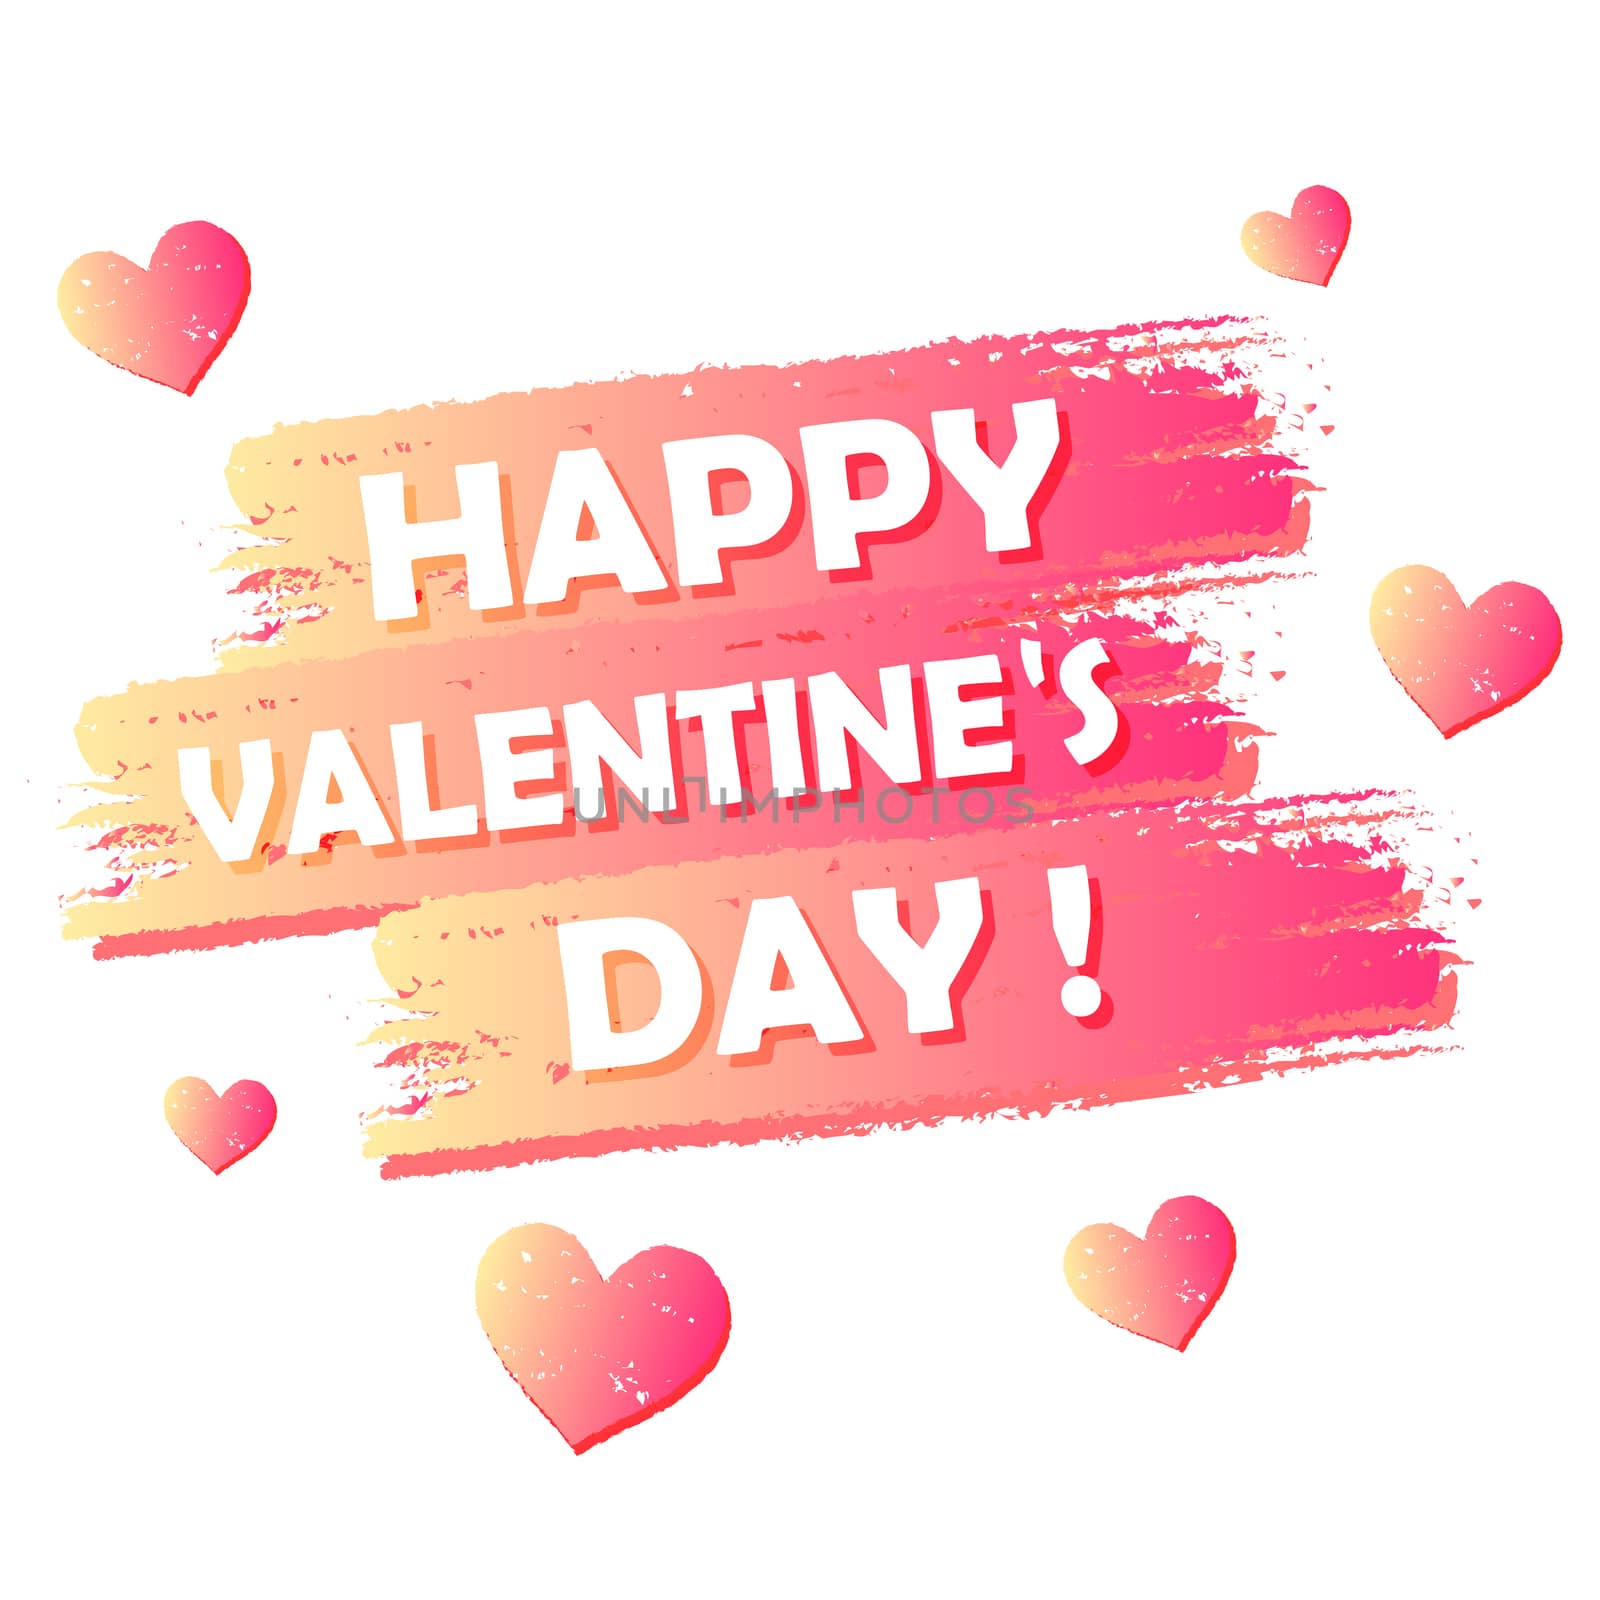 happy valentine`s day banner - text in pink drawn label